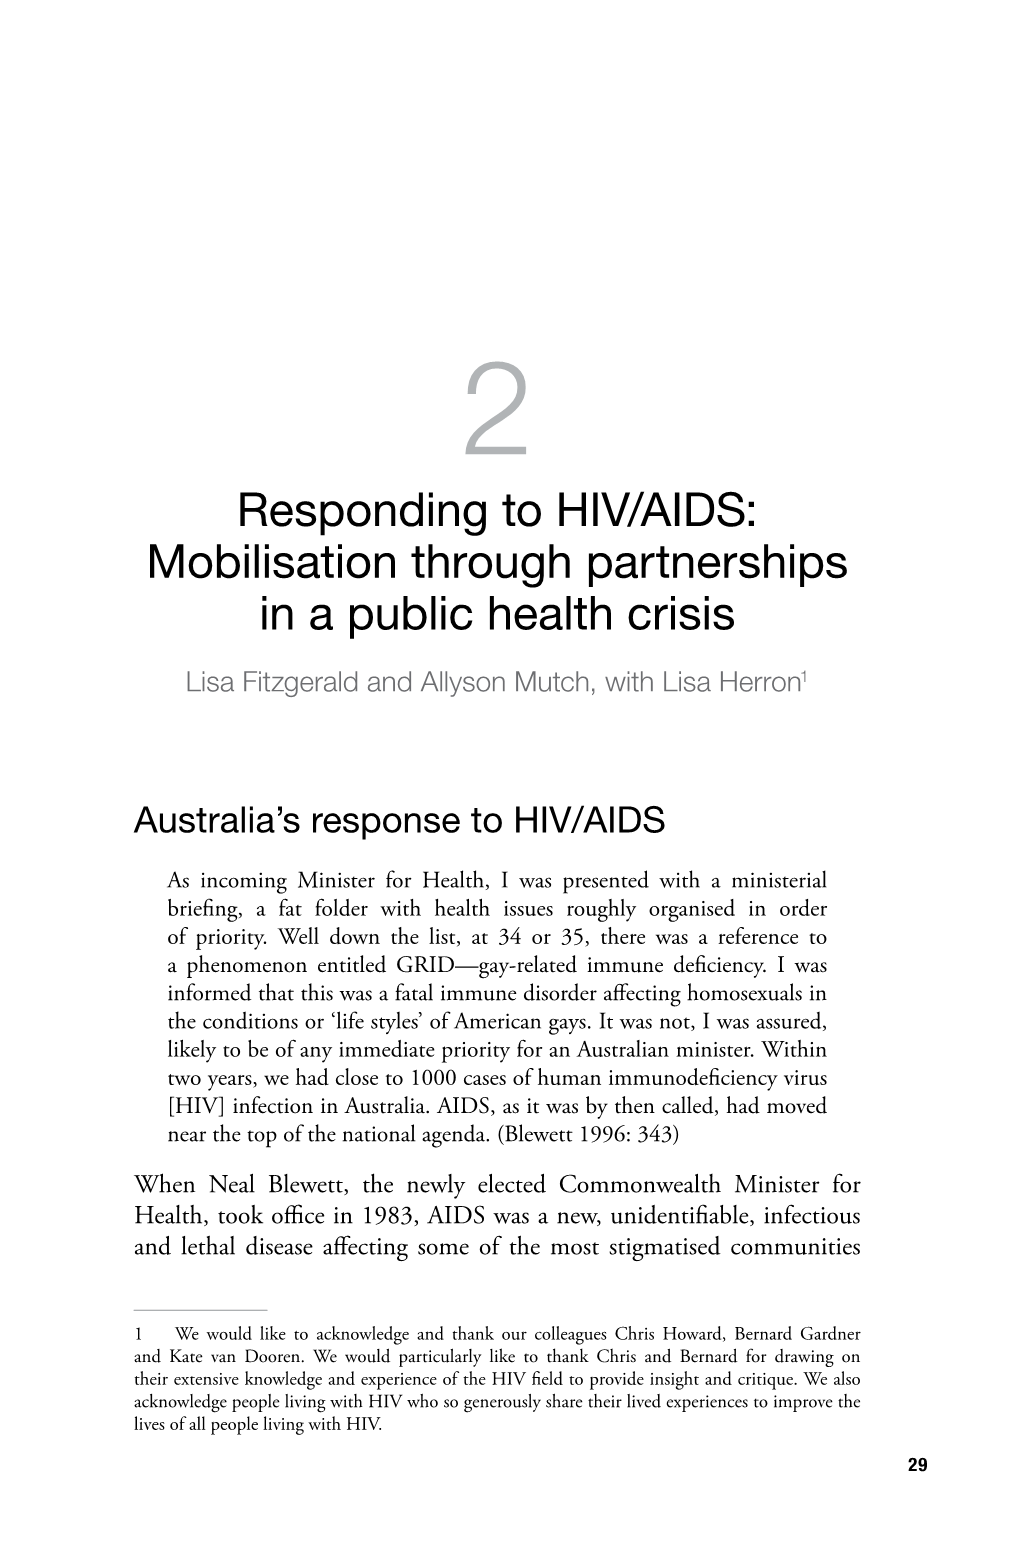 2. Responding to HIV/AIDS